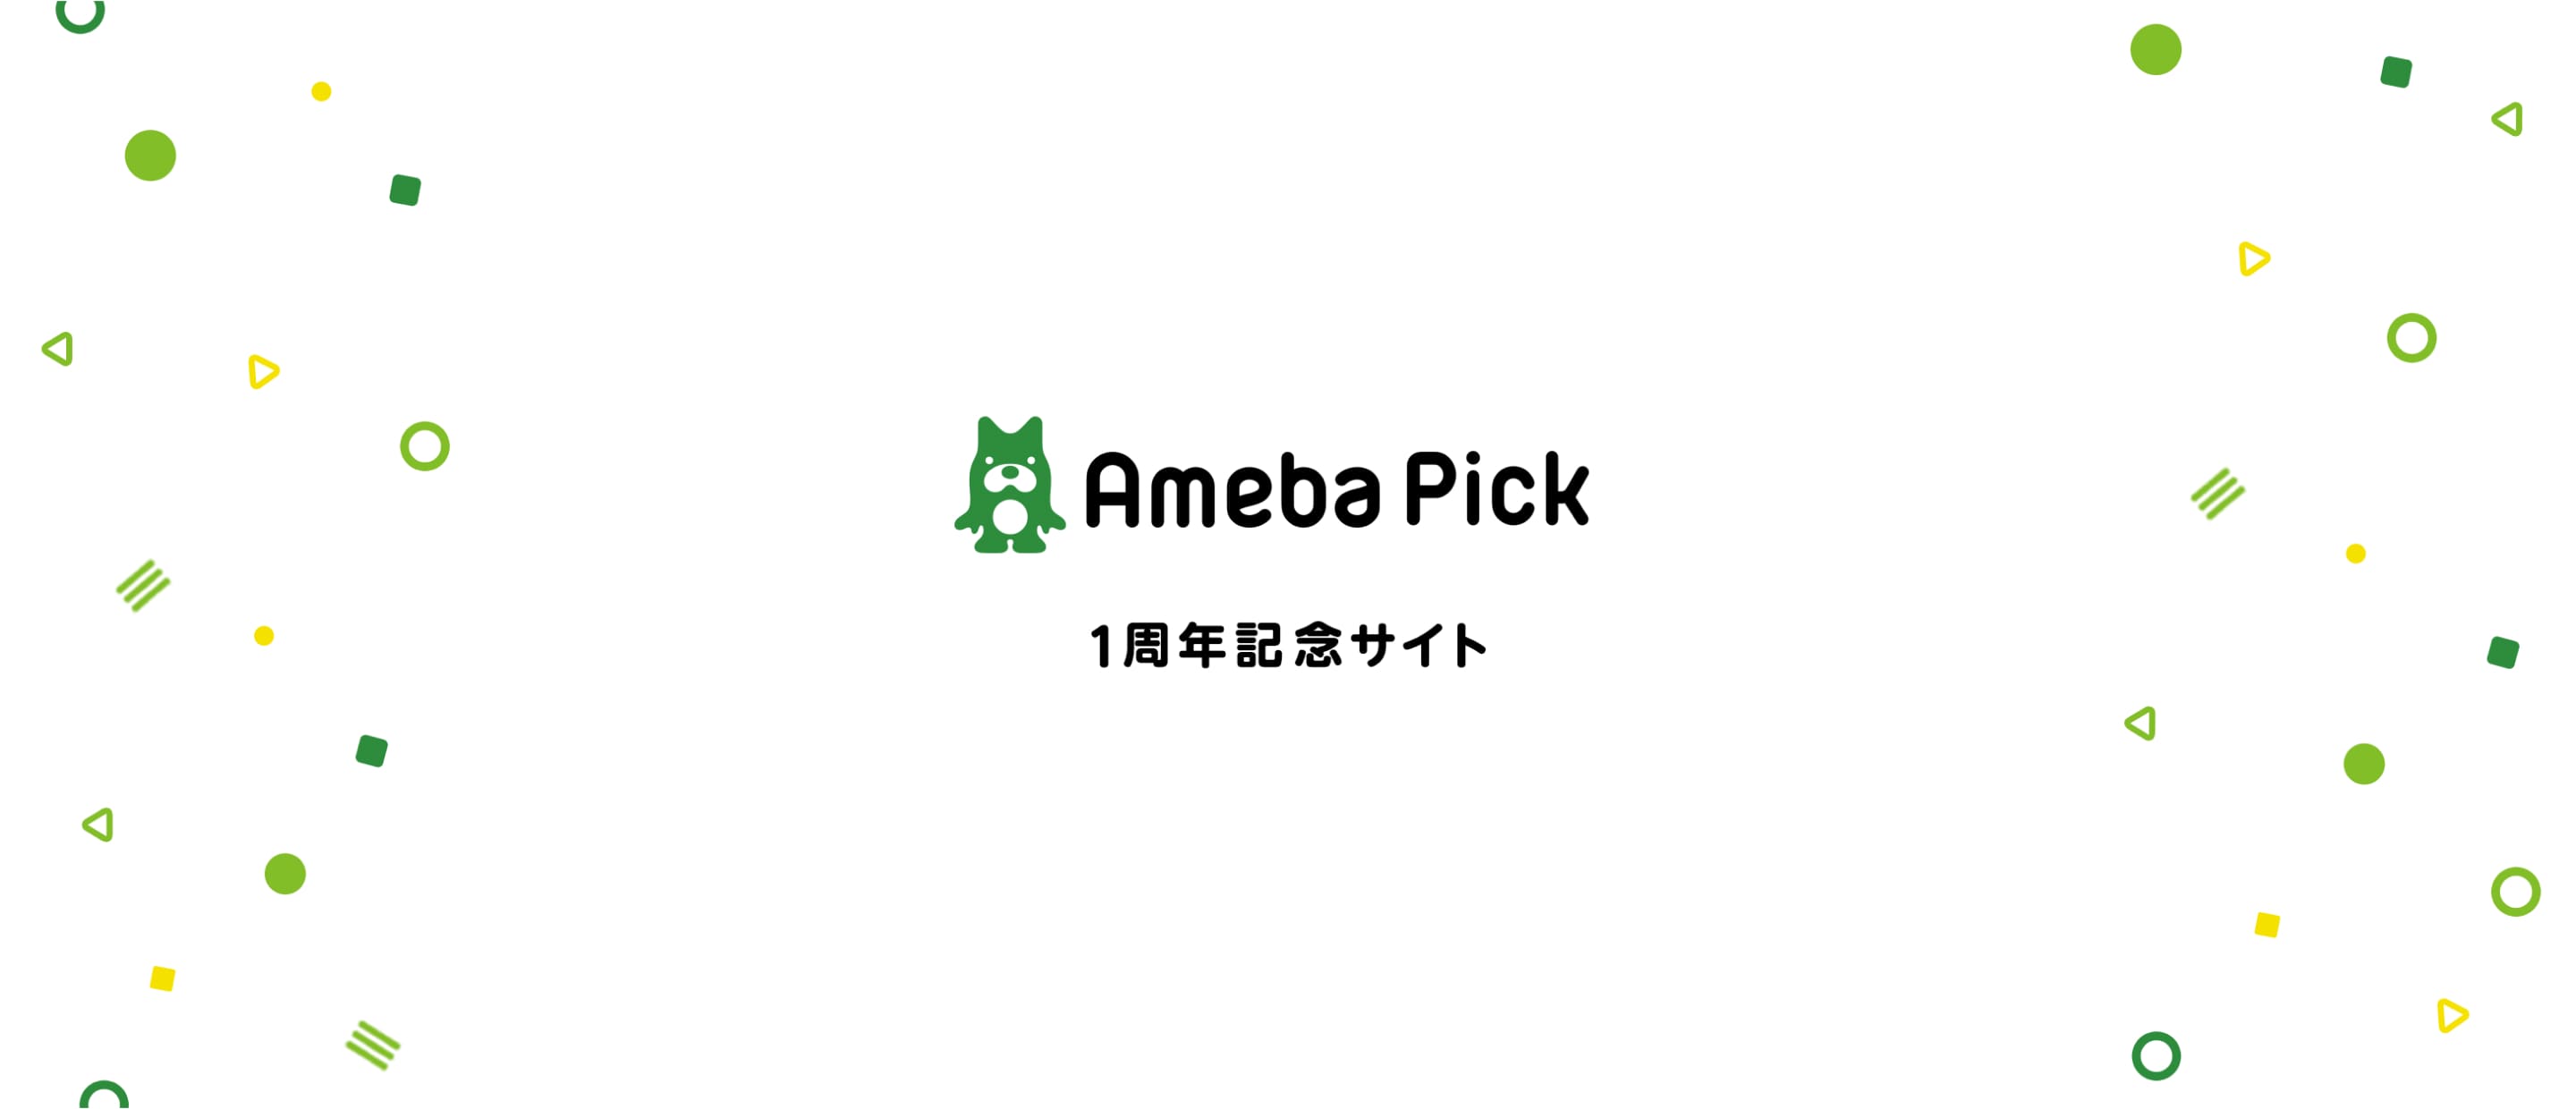 Ameba Pick 1周年記念サイト